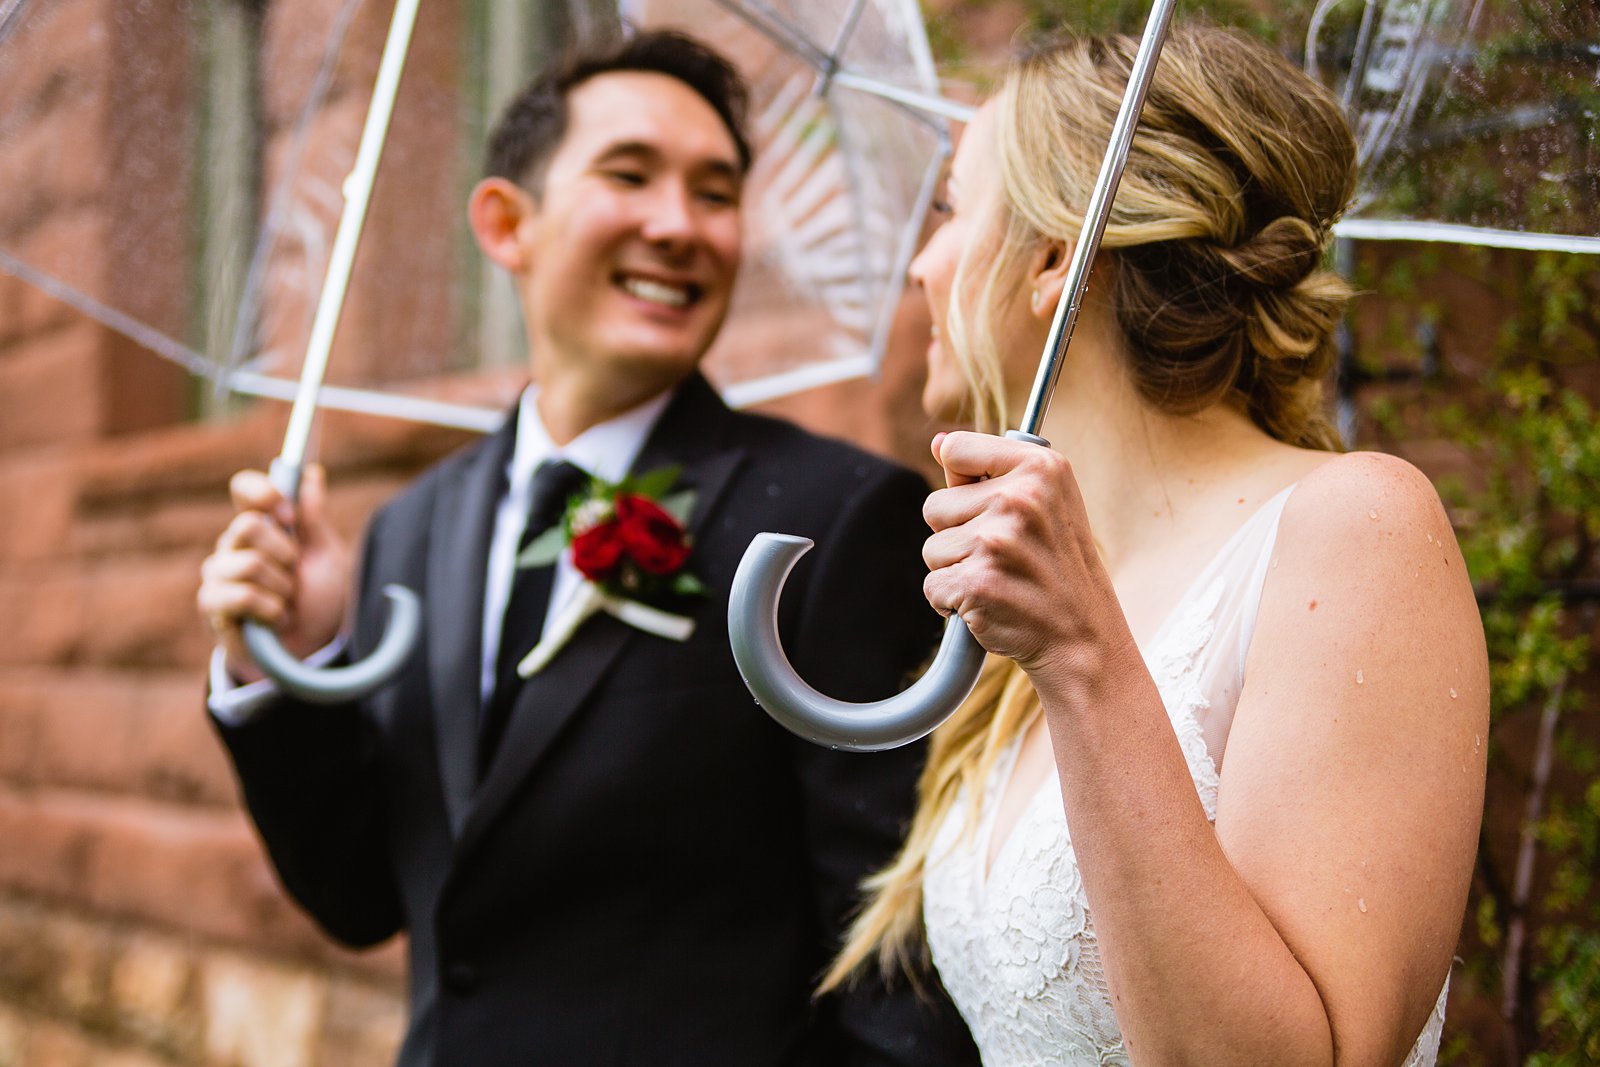 Bride and groom holding umbrellas on their rainy wedding day by Flagstaff wedding photographer PMA Photography.